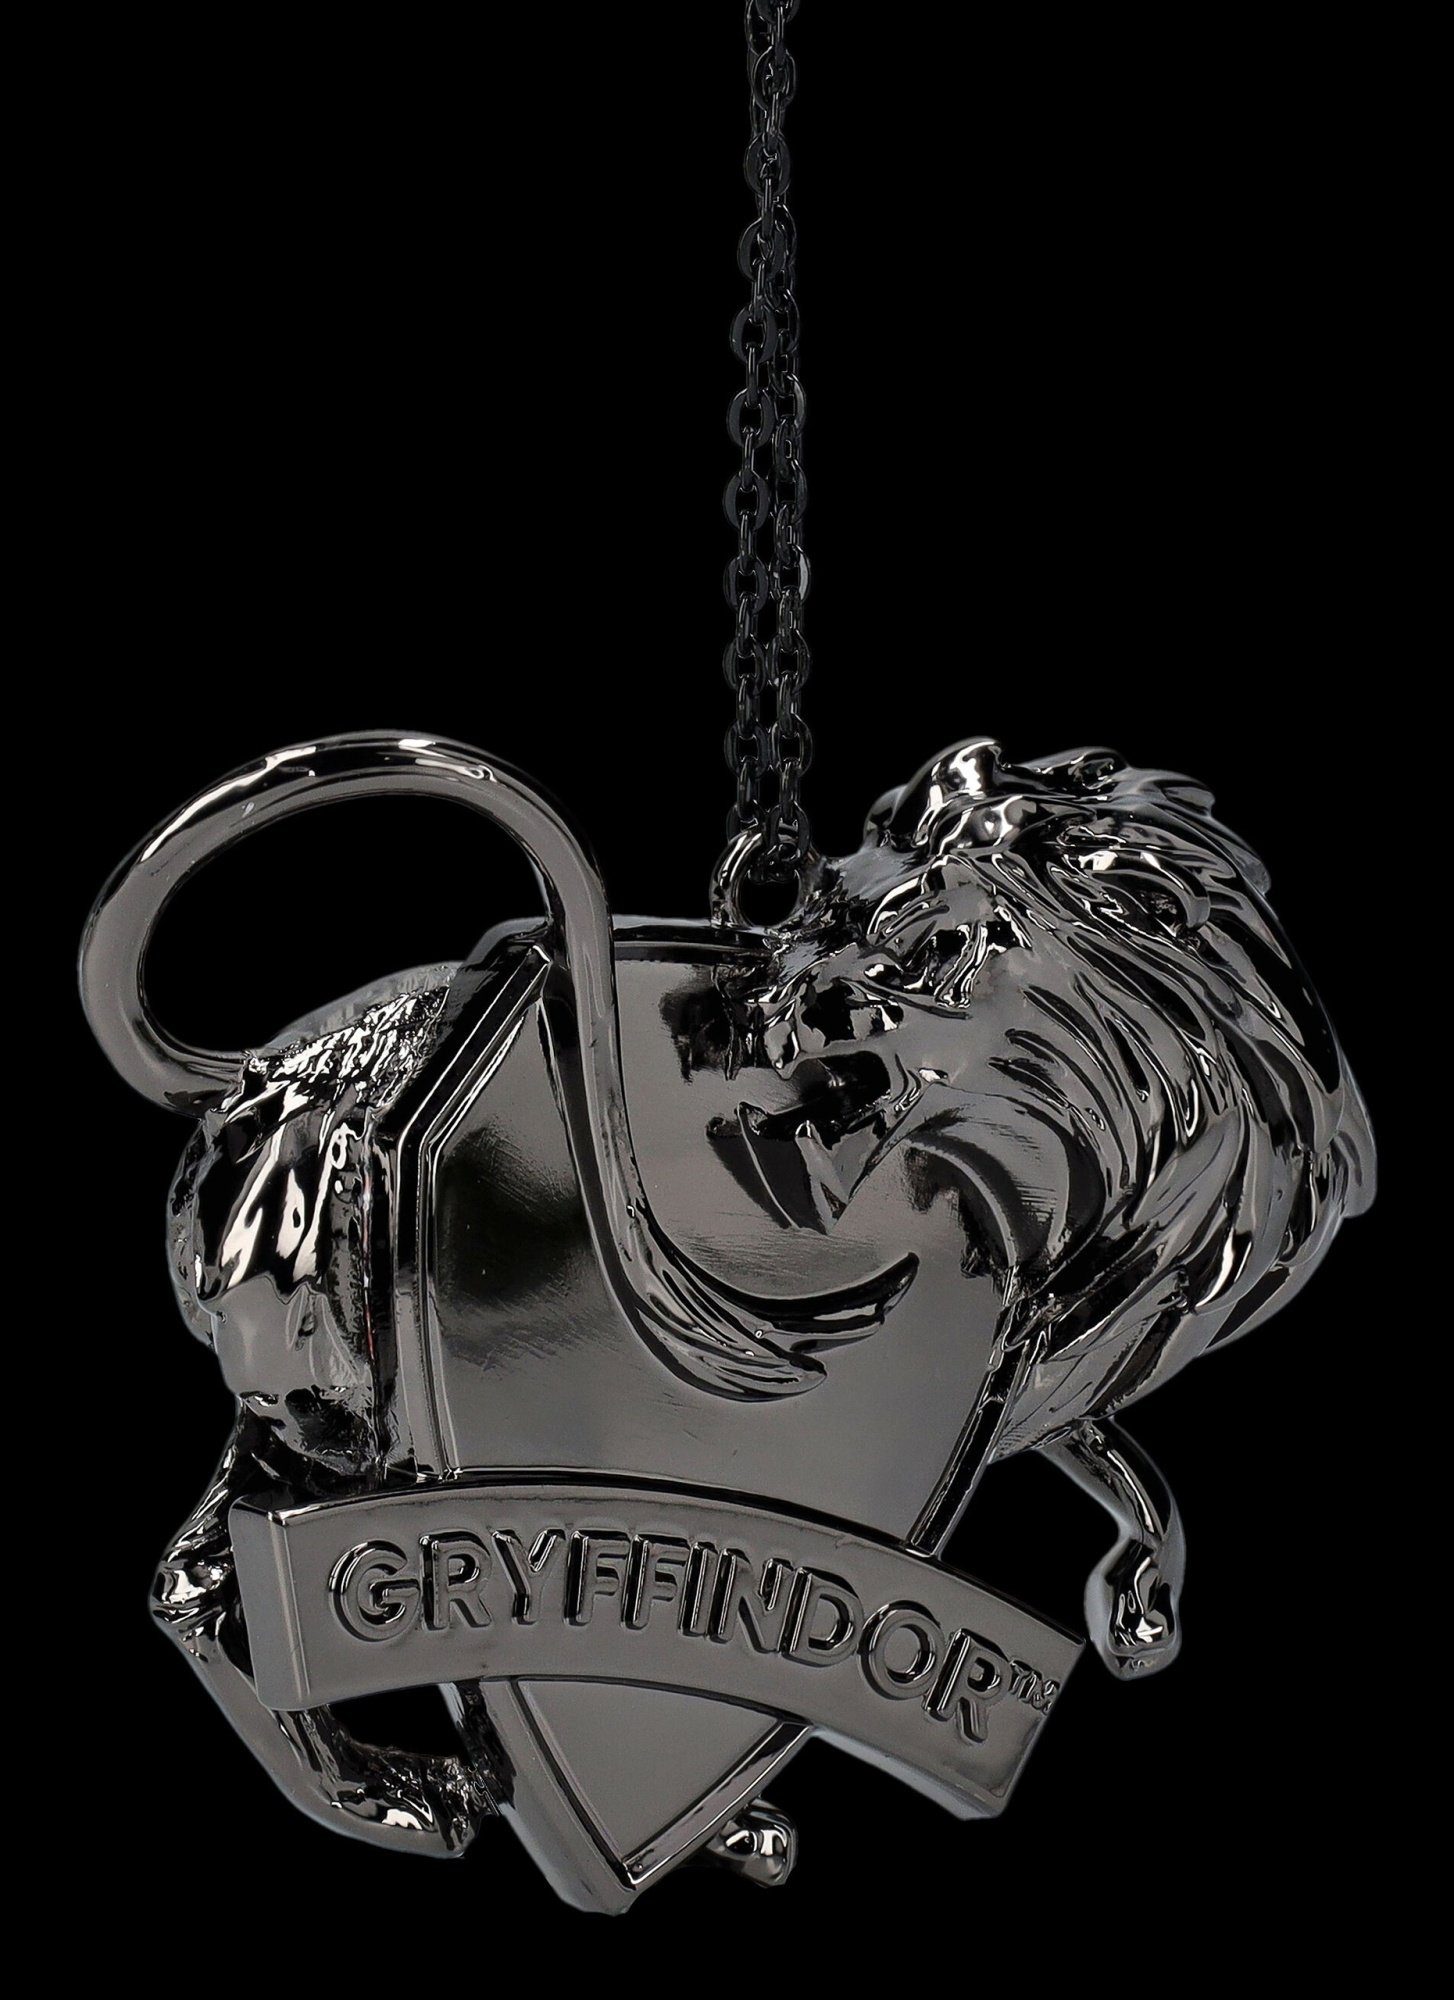 GmbH - Dekoanhänger Christbaumschmuck - Fantasy Harry Shop Potter (1-tlg) Hängeornament Figuren Wappen Gryffindor